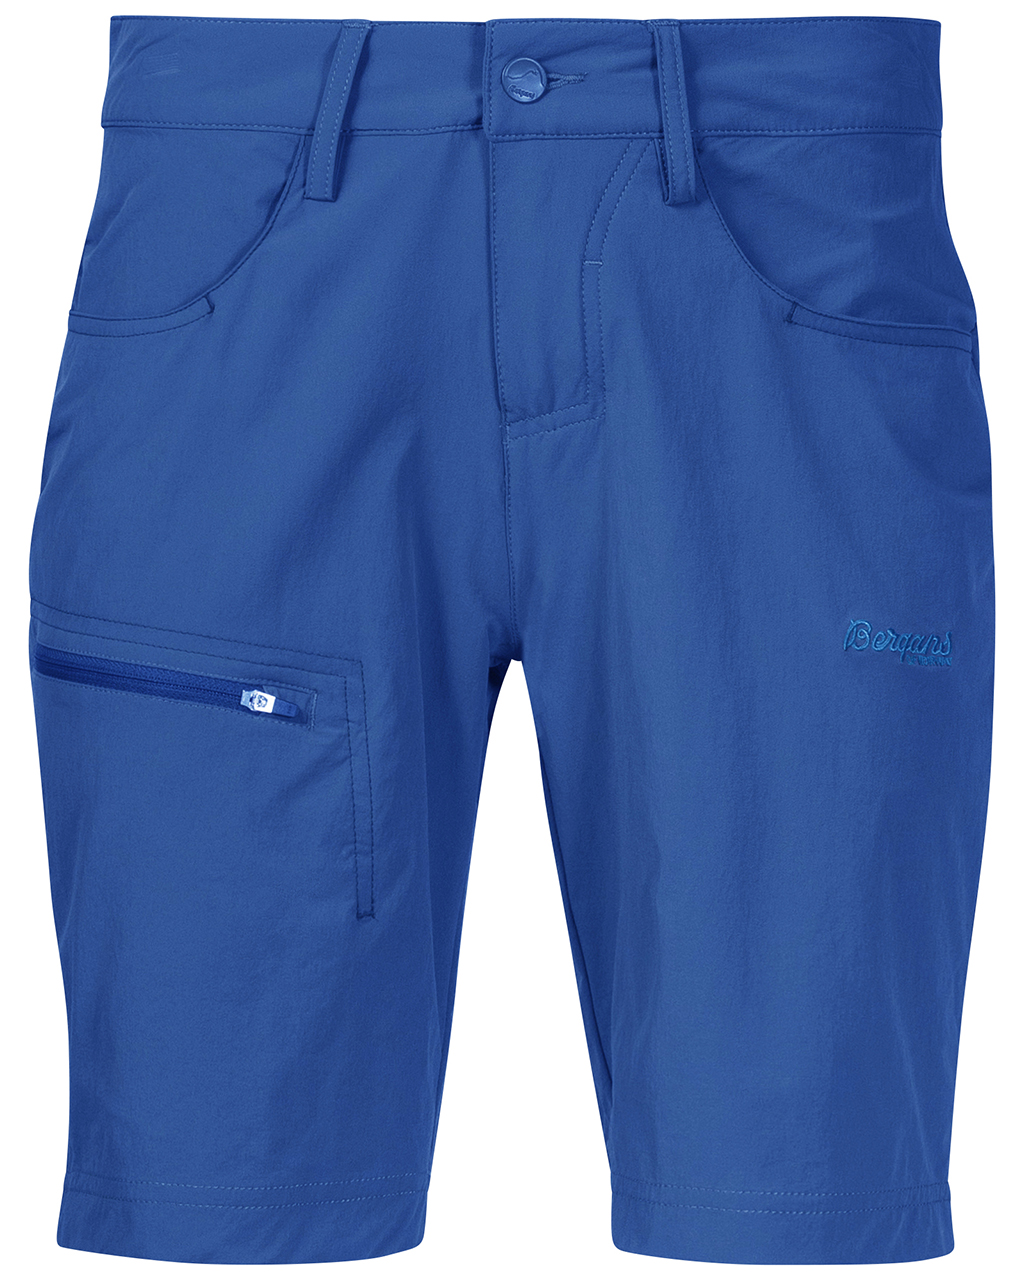 Bergans Moa Shorts W Classic Blue/Cloud Blue (Storlek S)